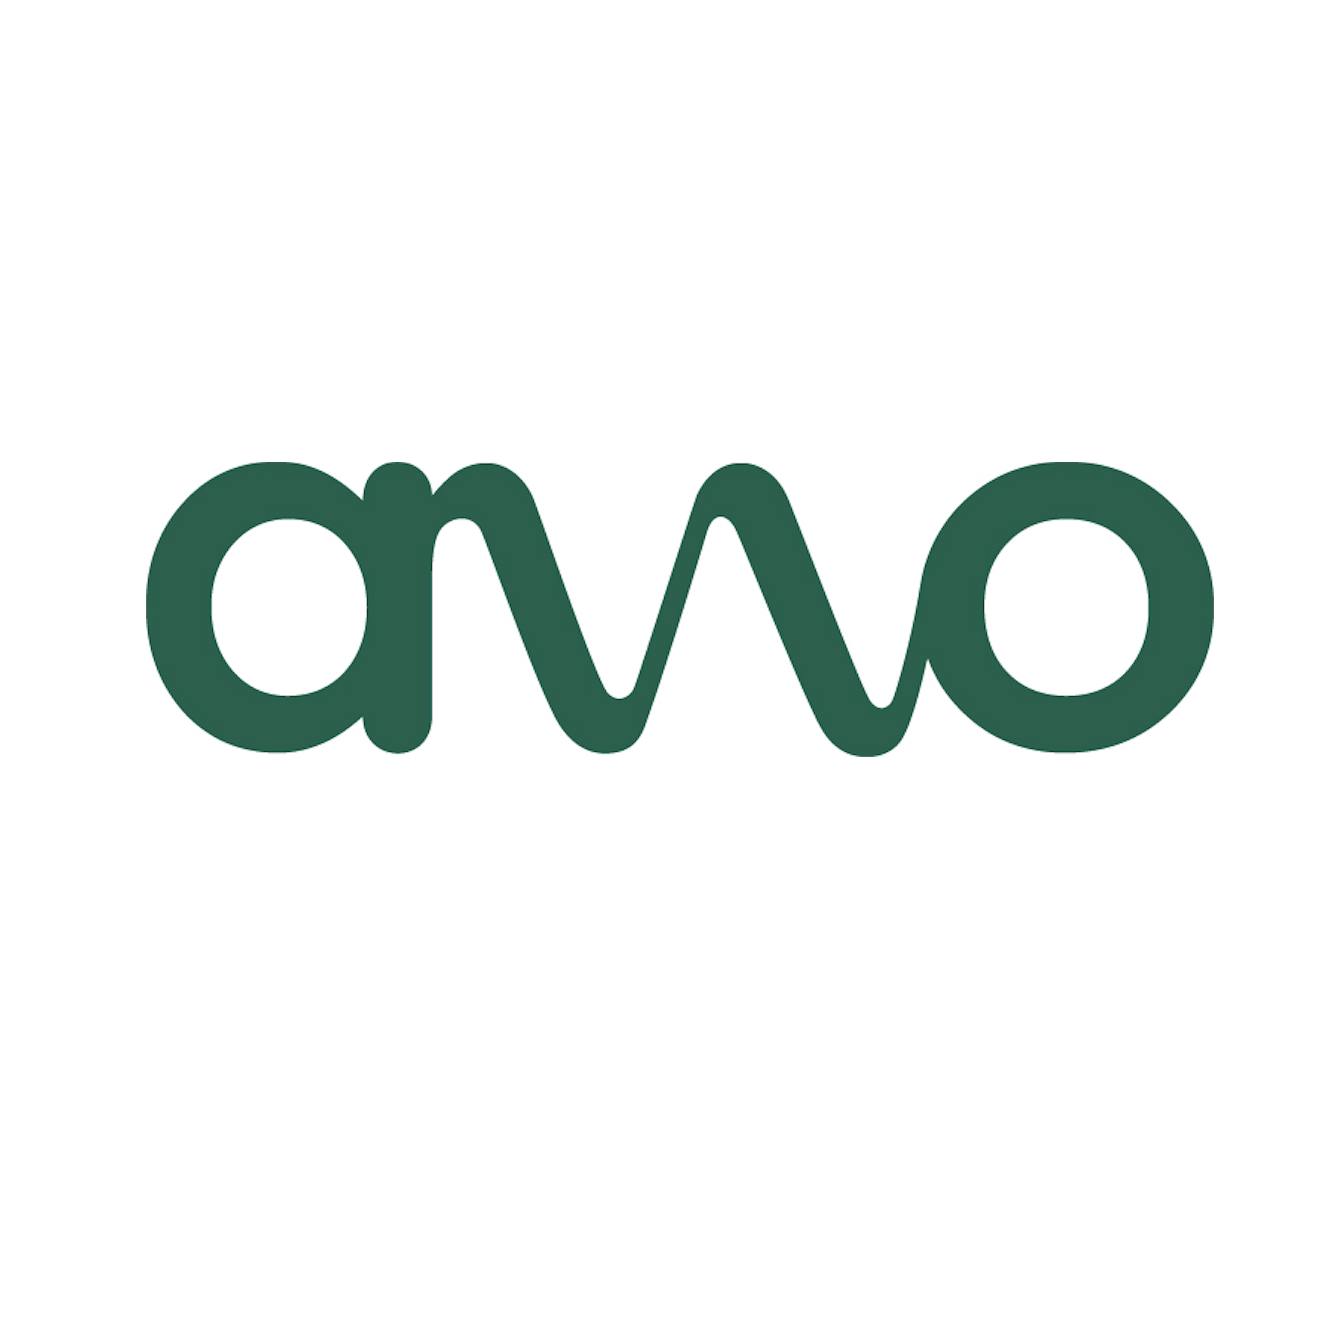 AMO GmbH